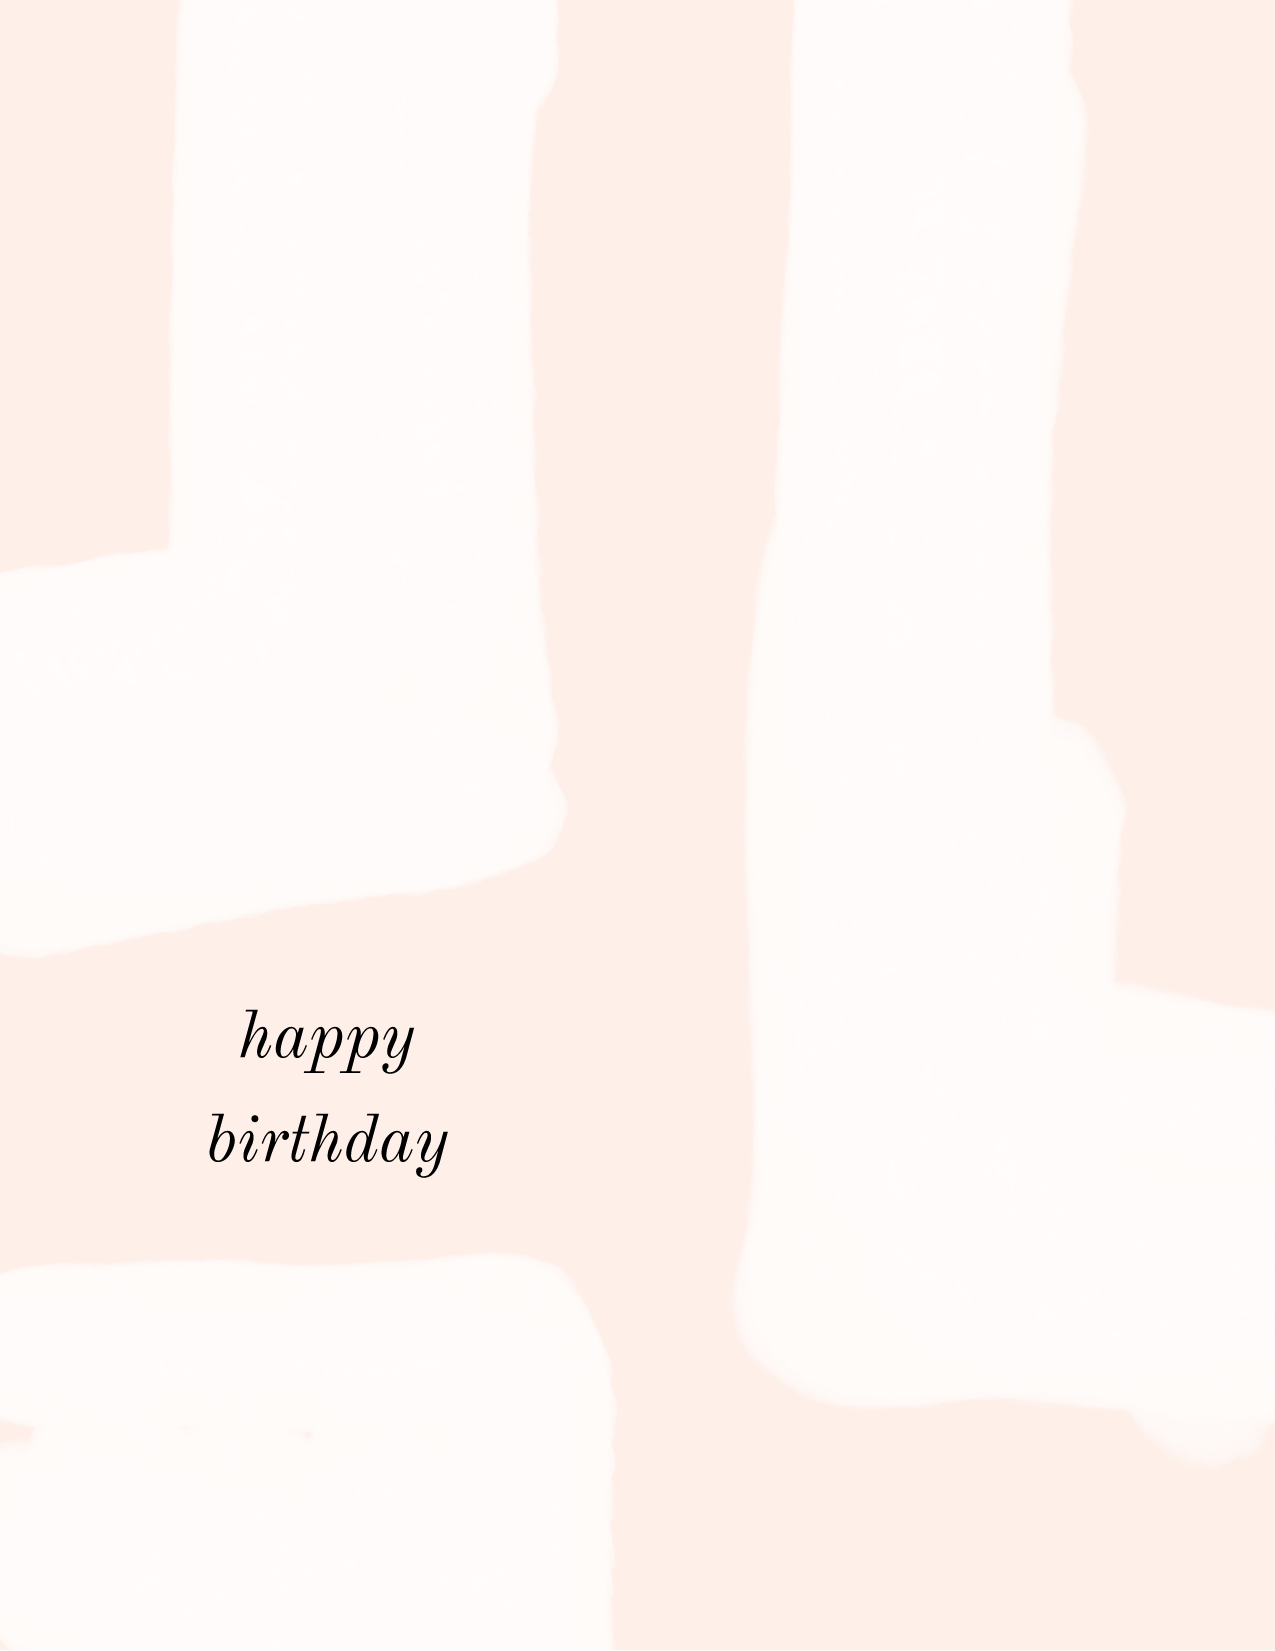 Abstract Birthday Greeting Card